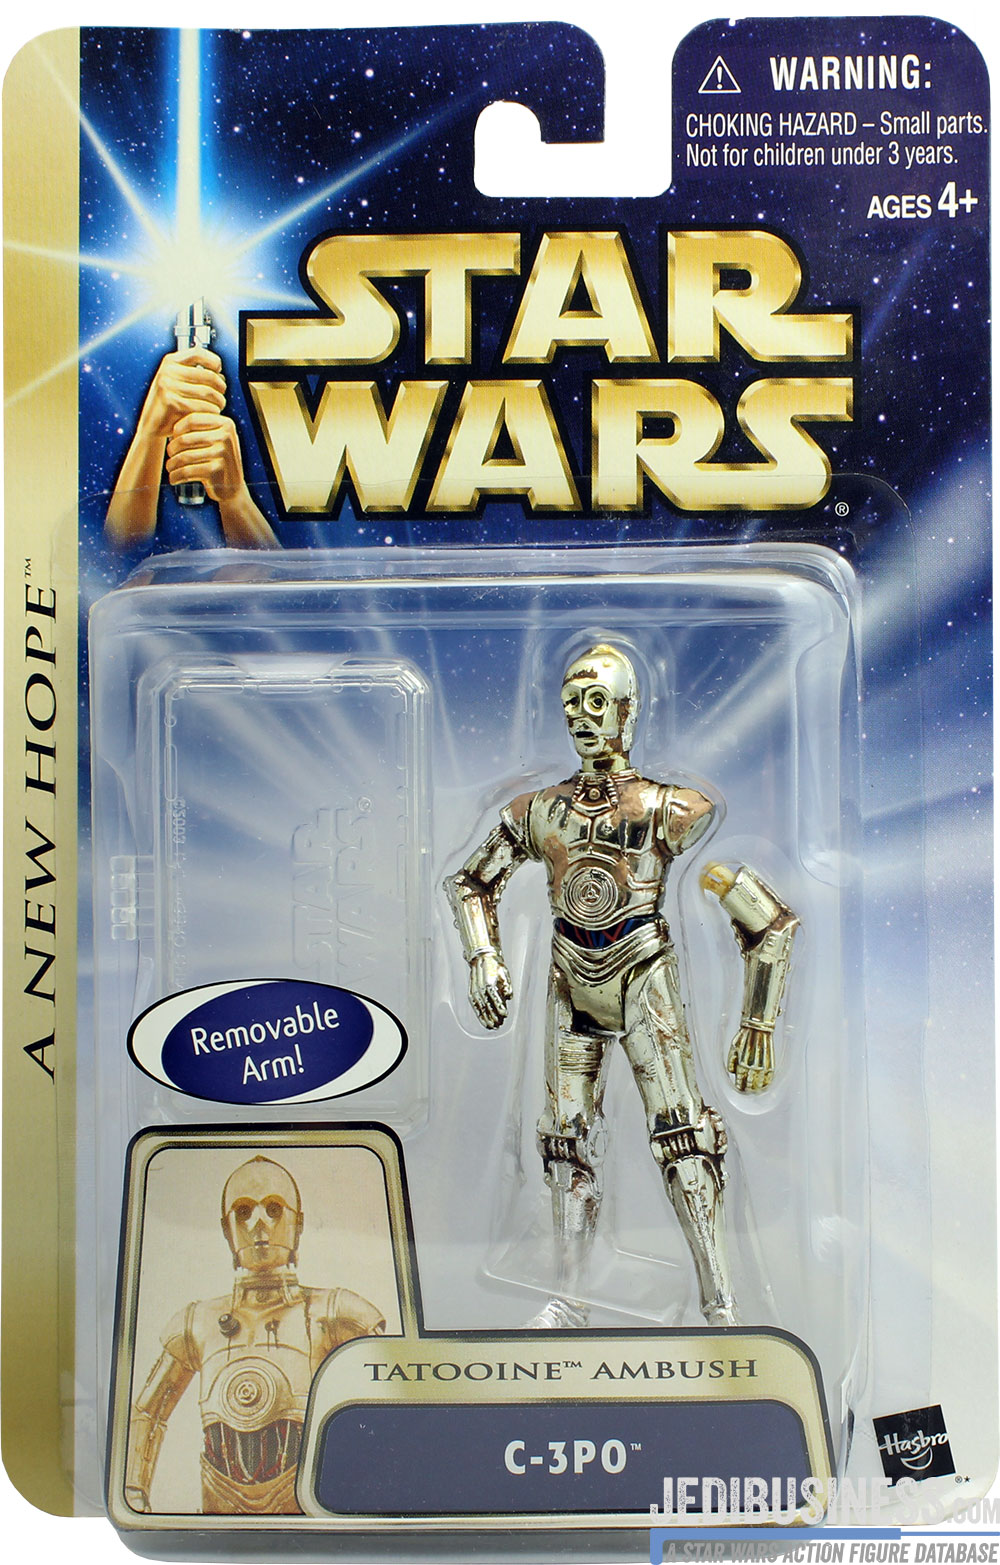 C-3PO Tatooine Ambush